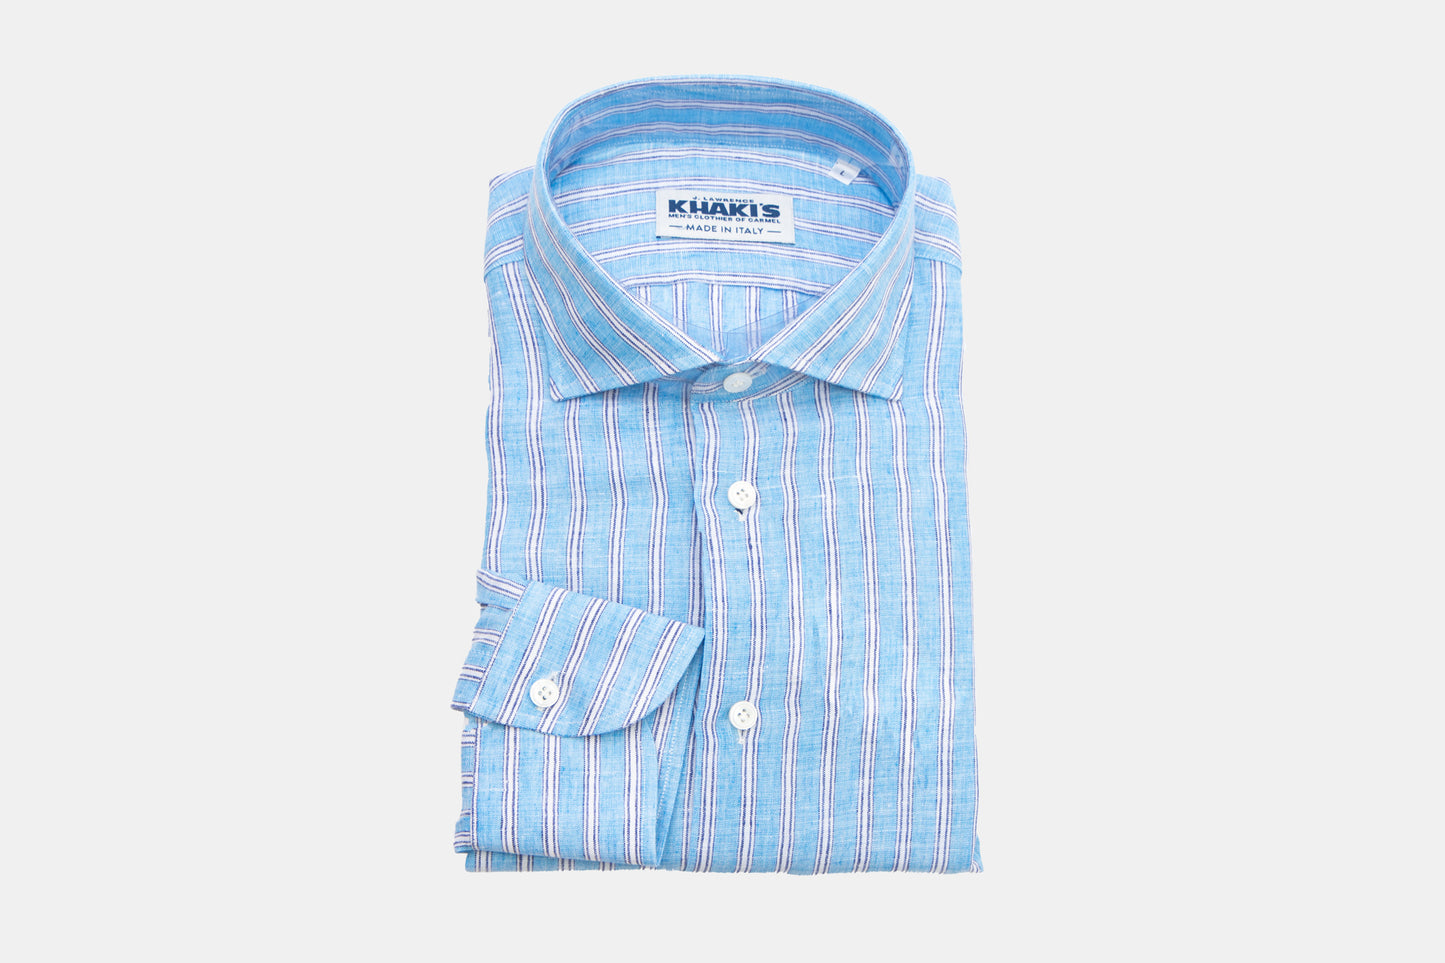 Khaki's of Carmel - blue striped shirt